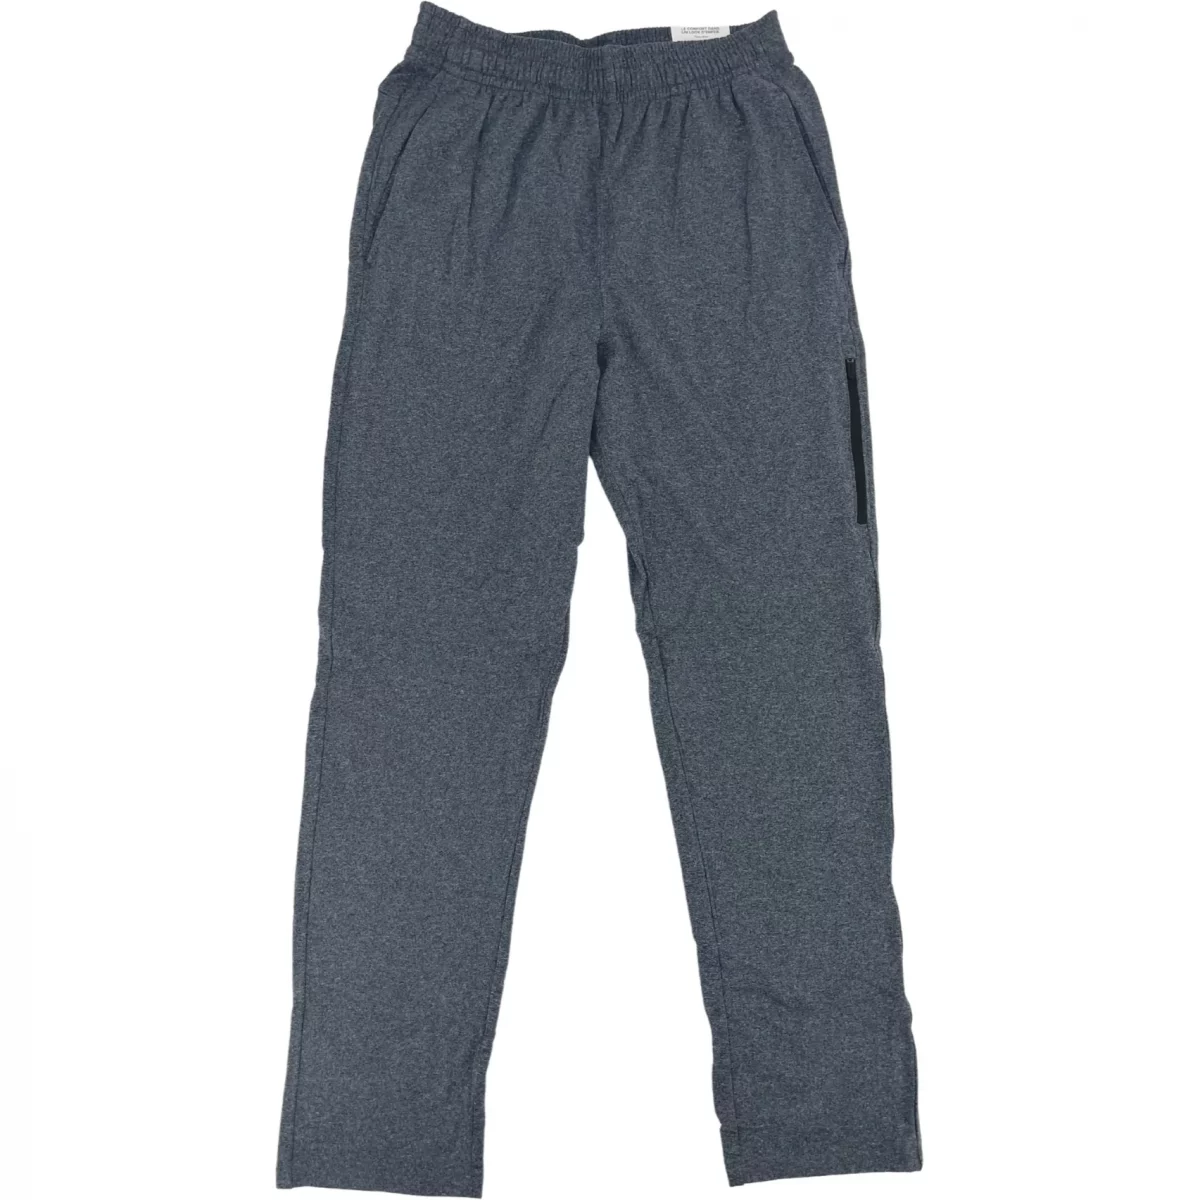 Gaiam Men's Sweatpants / Men's Jogger Pants / Slim Fit / Grey / Size Small